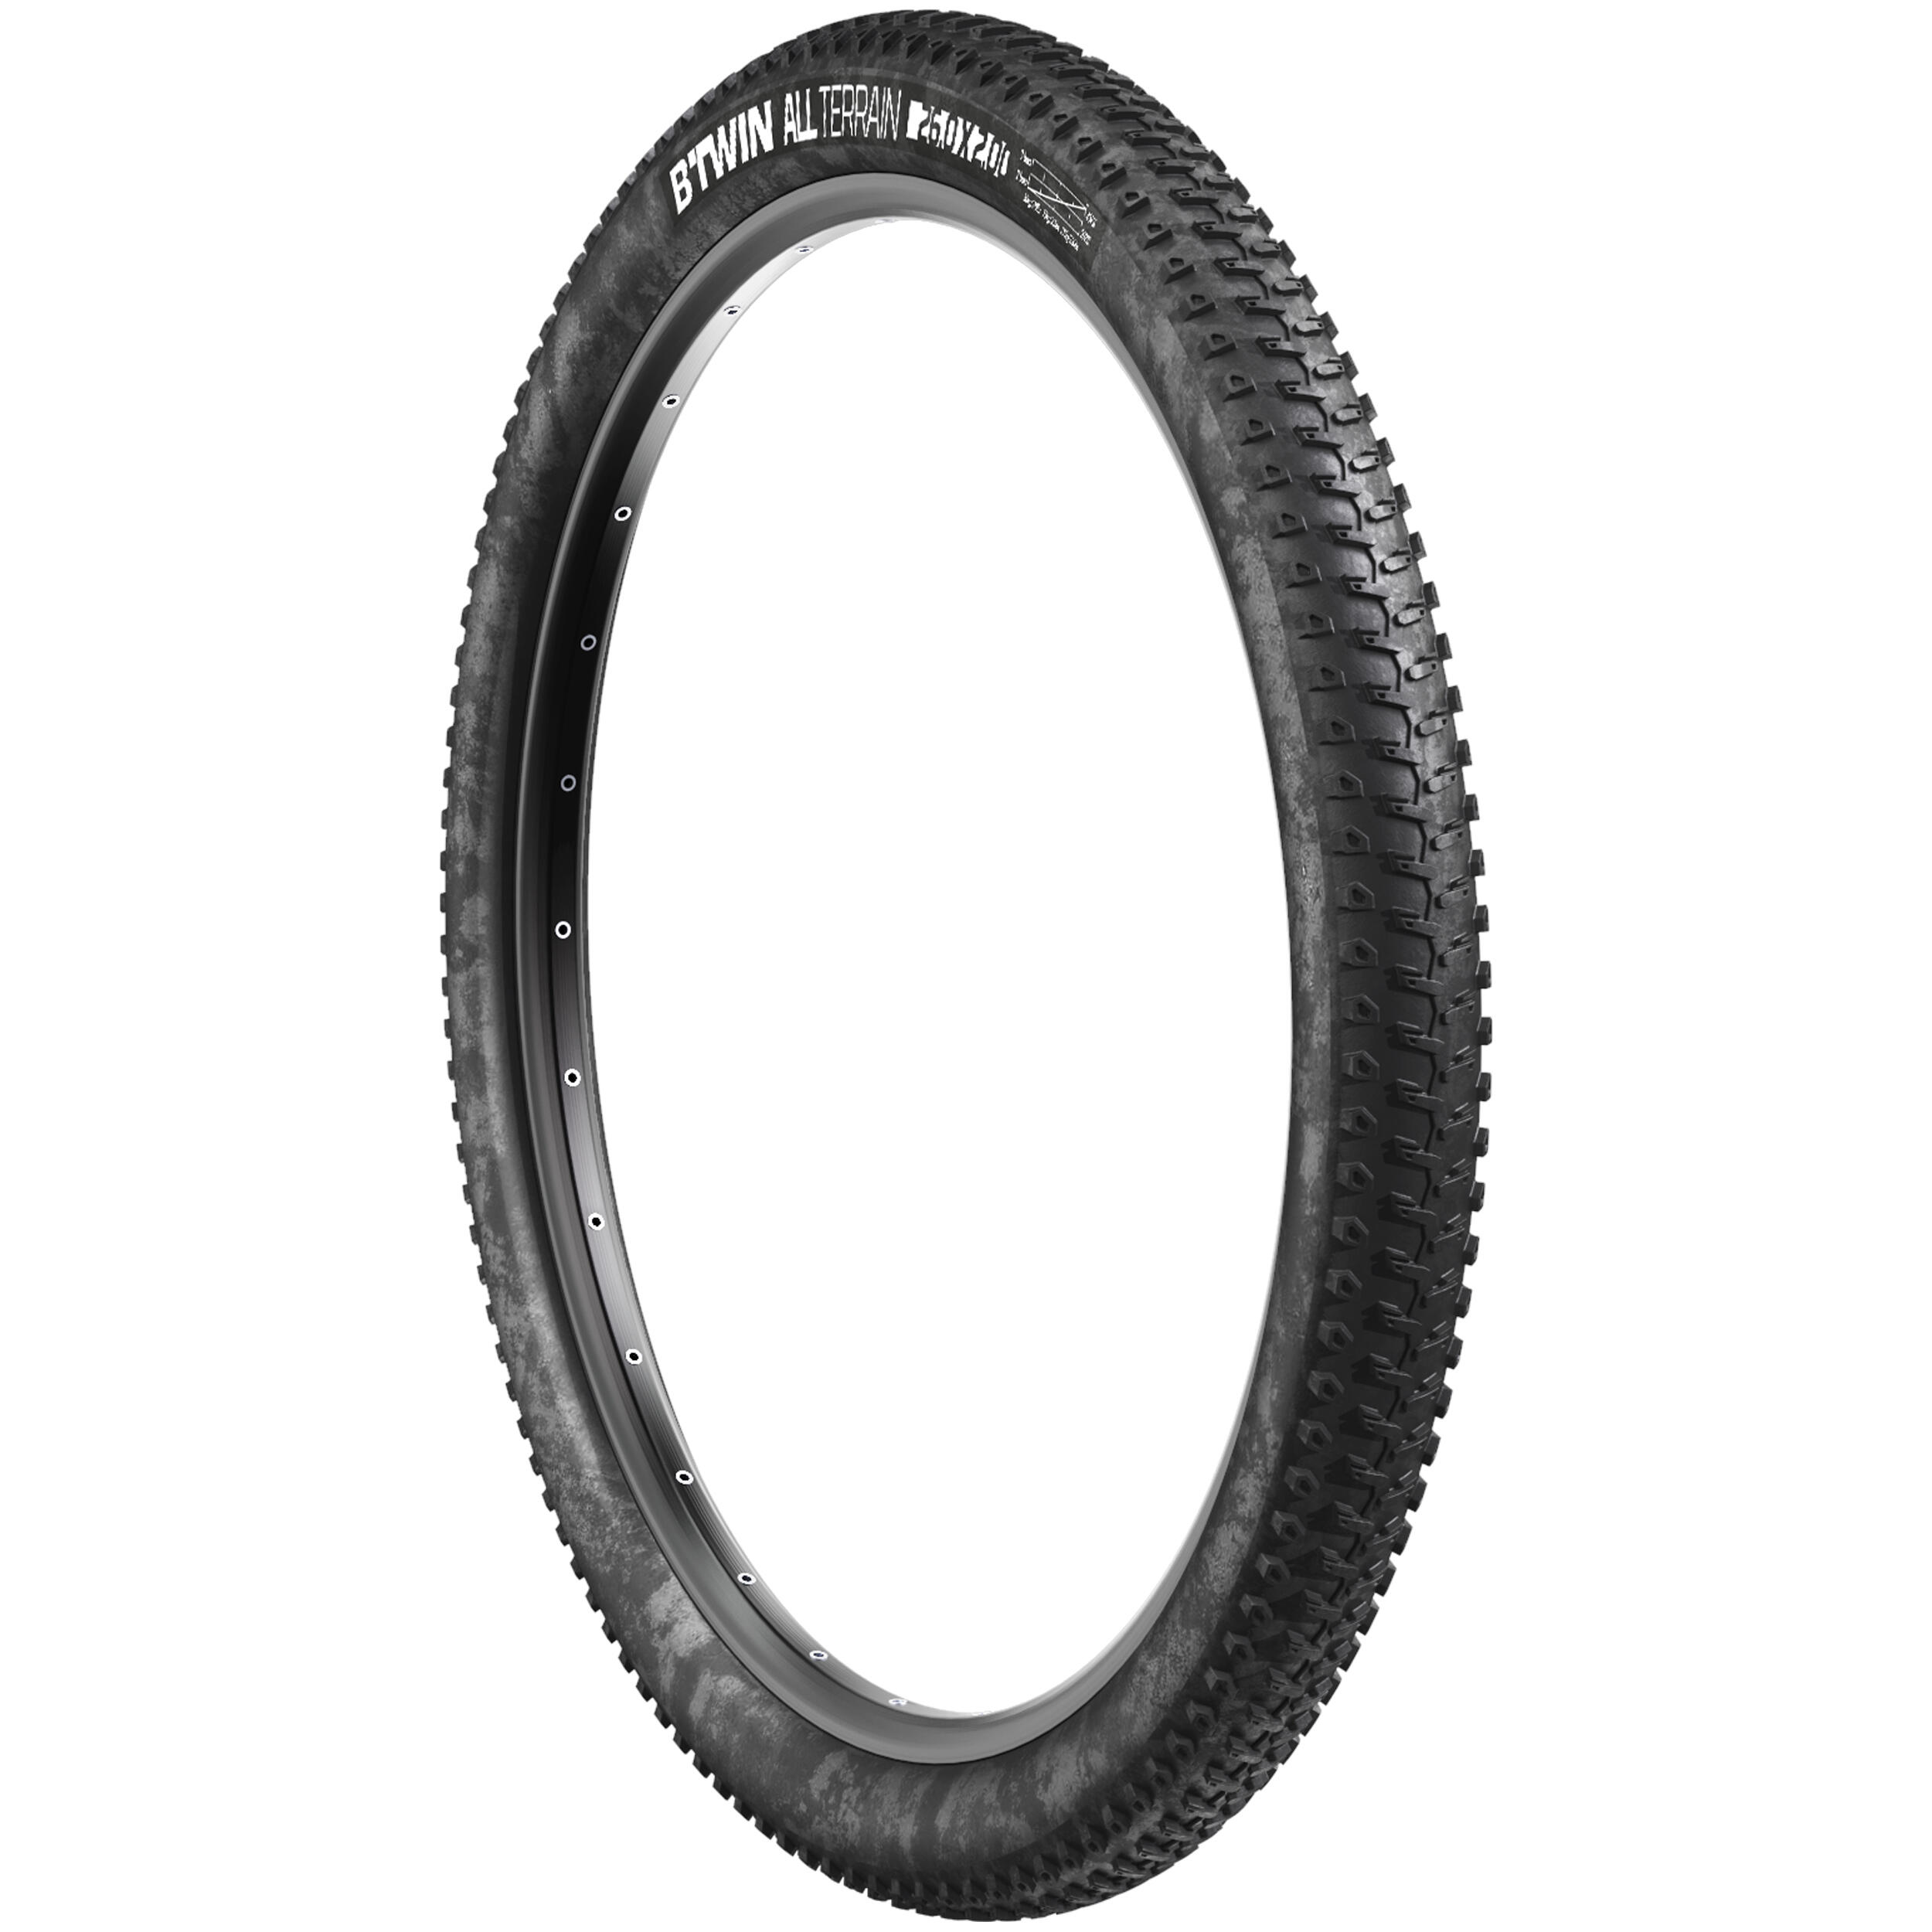 All-Terrain Mountain Bike Wire Bead Tire - 26" - BTWIN